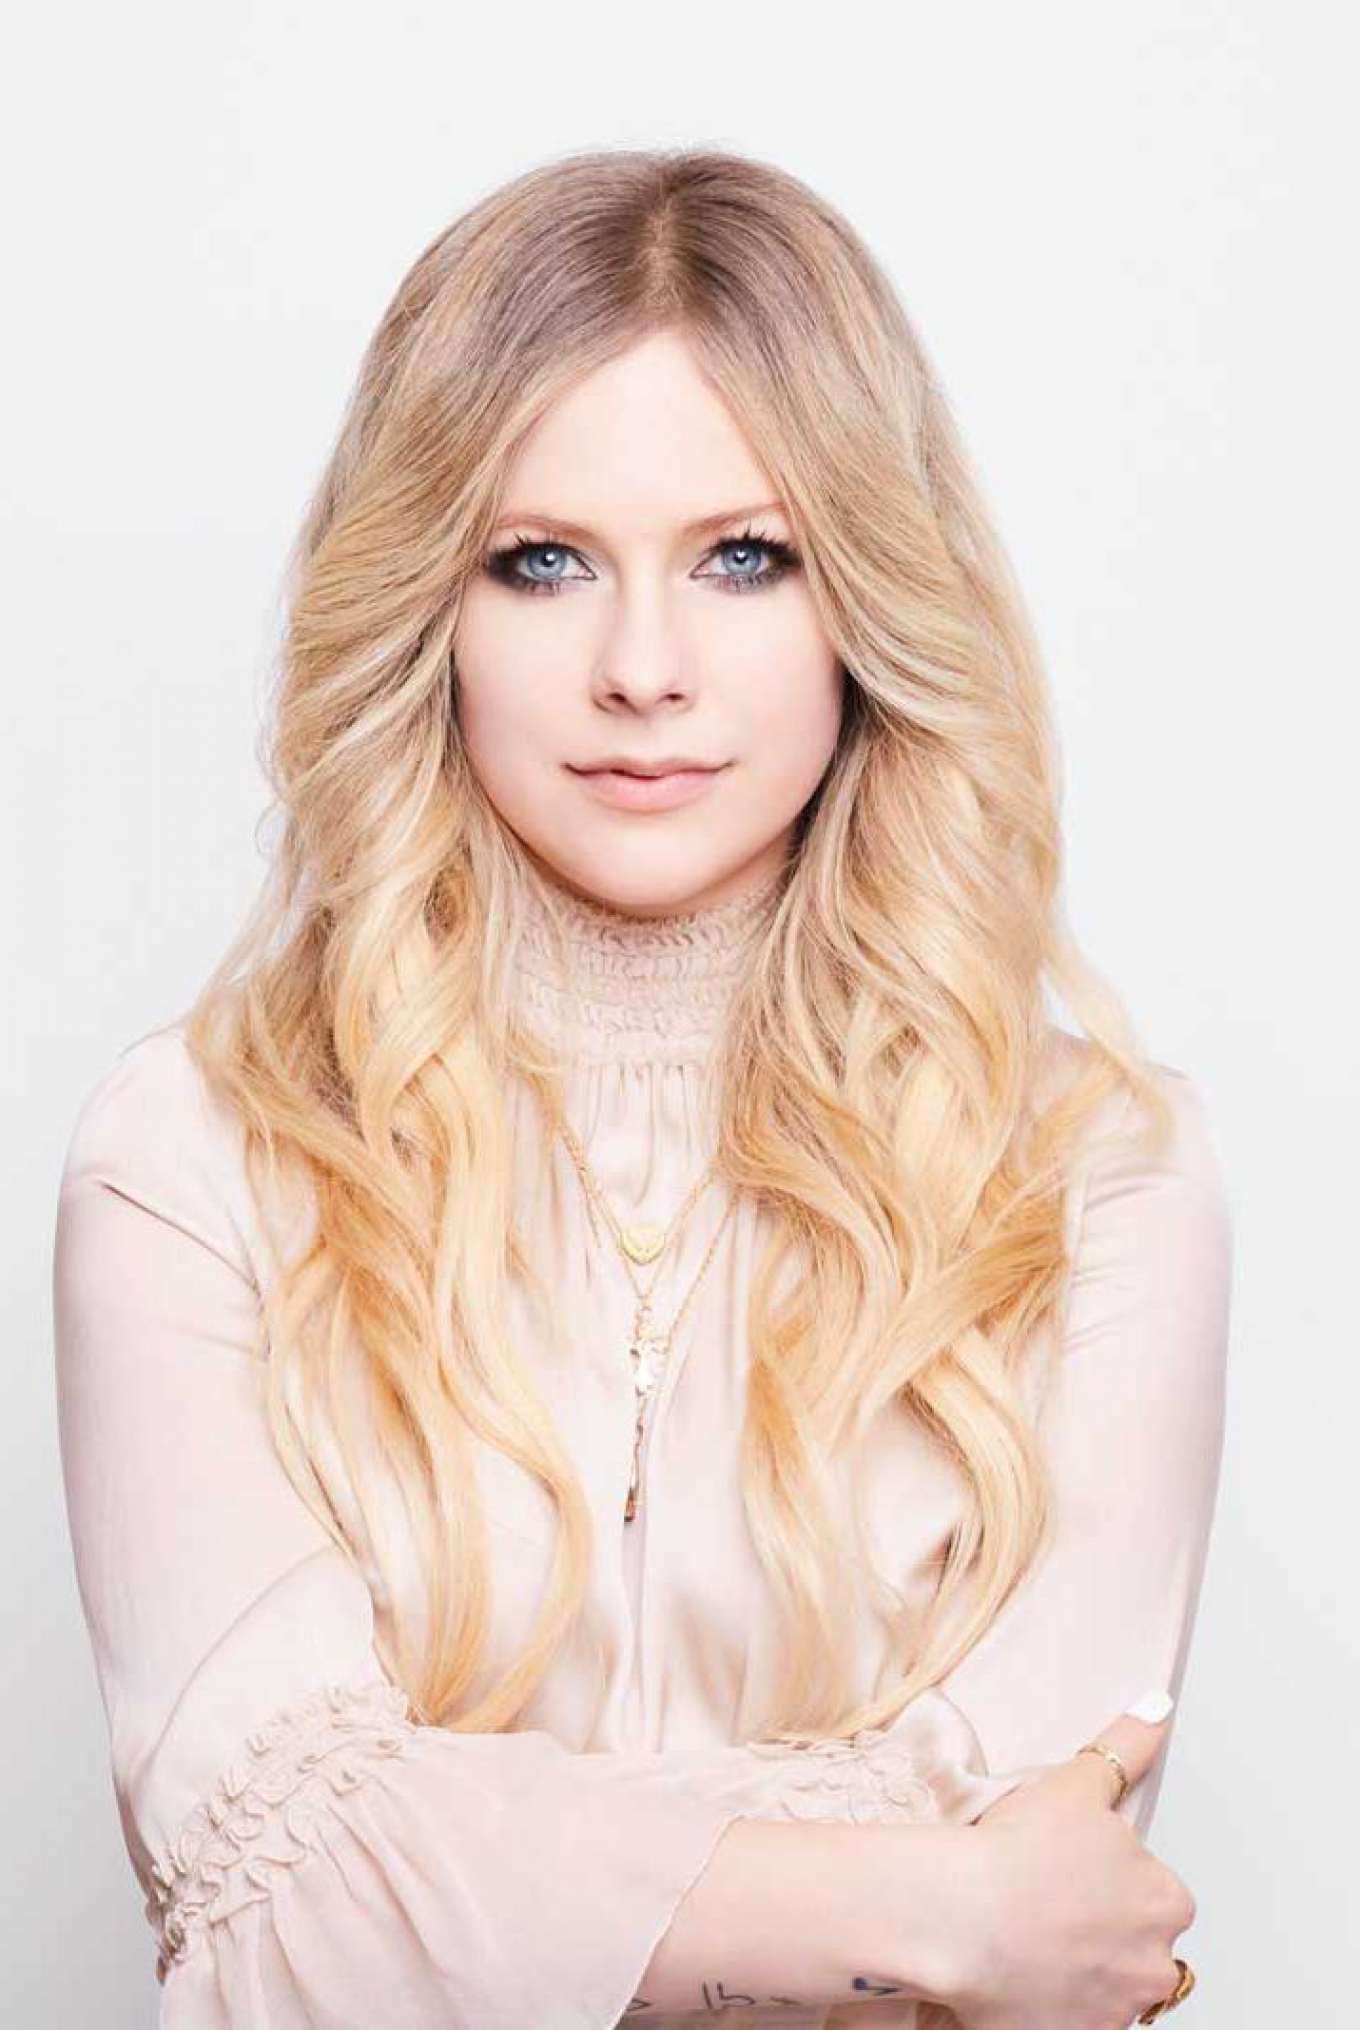 Avril Lavigne Photo 1250 Of 1268 Pics Wallpaper Photo Theplace2